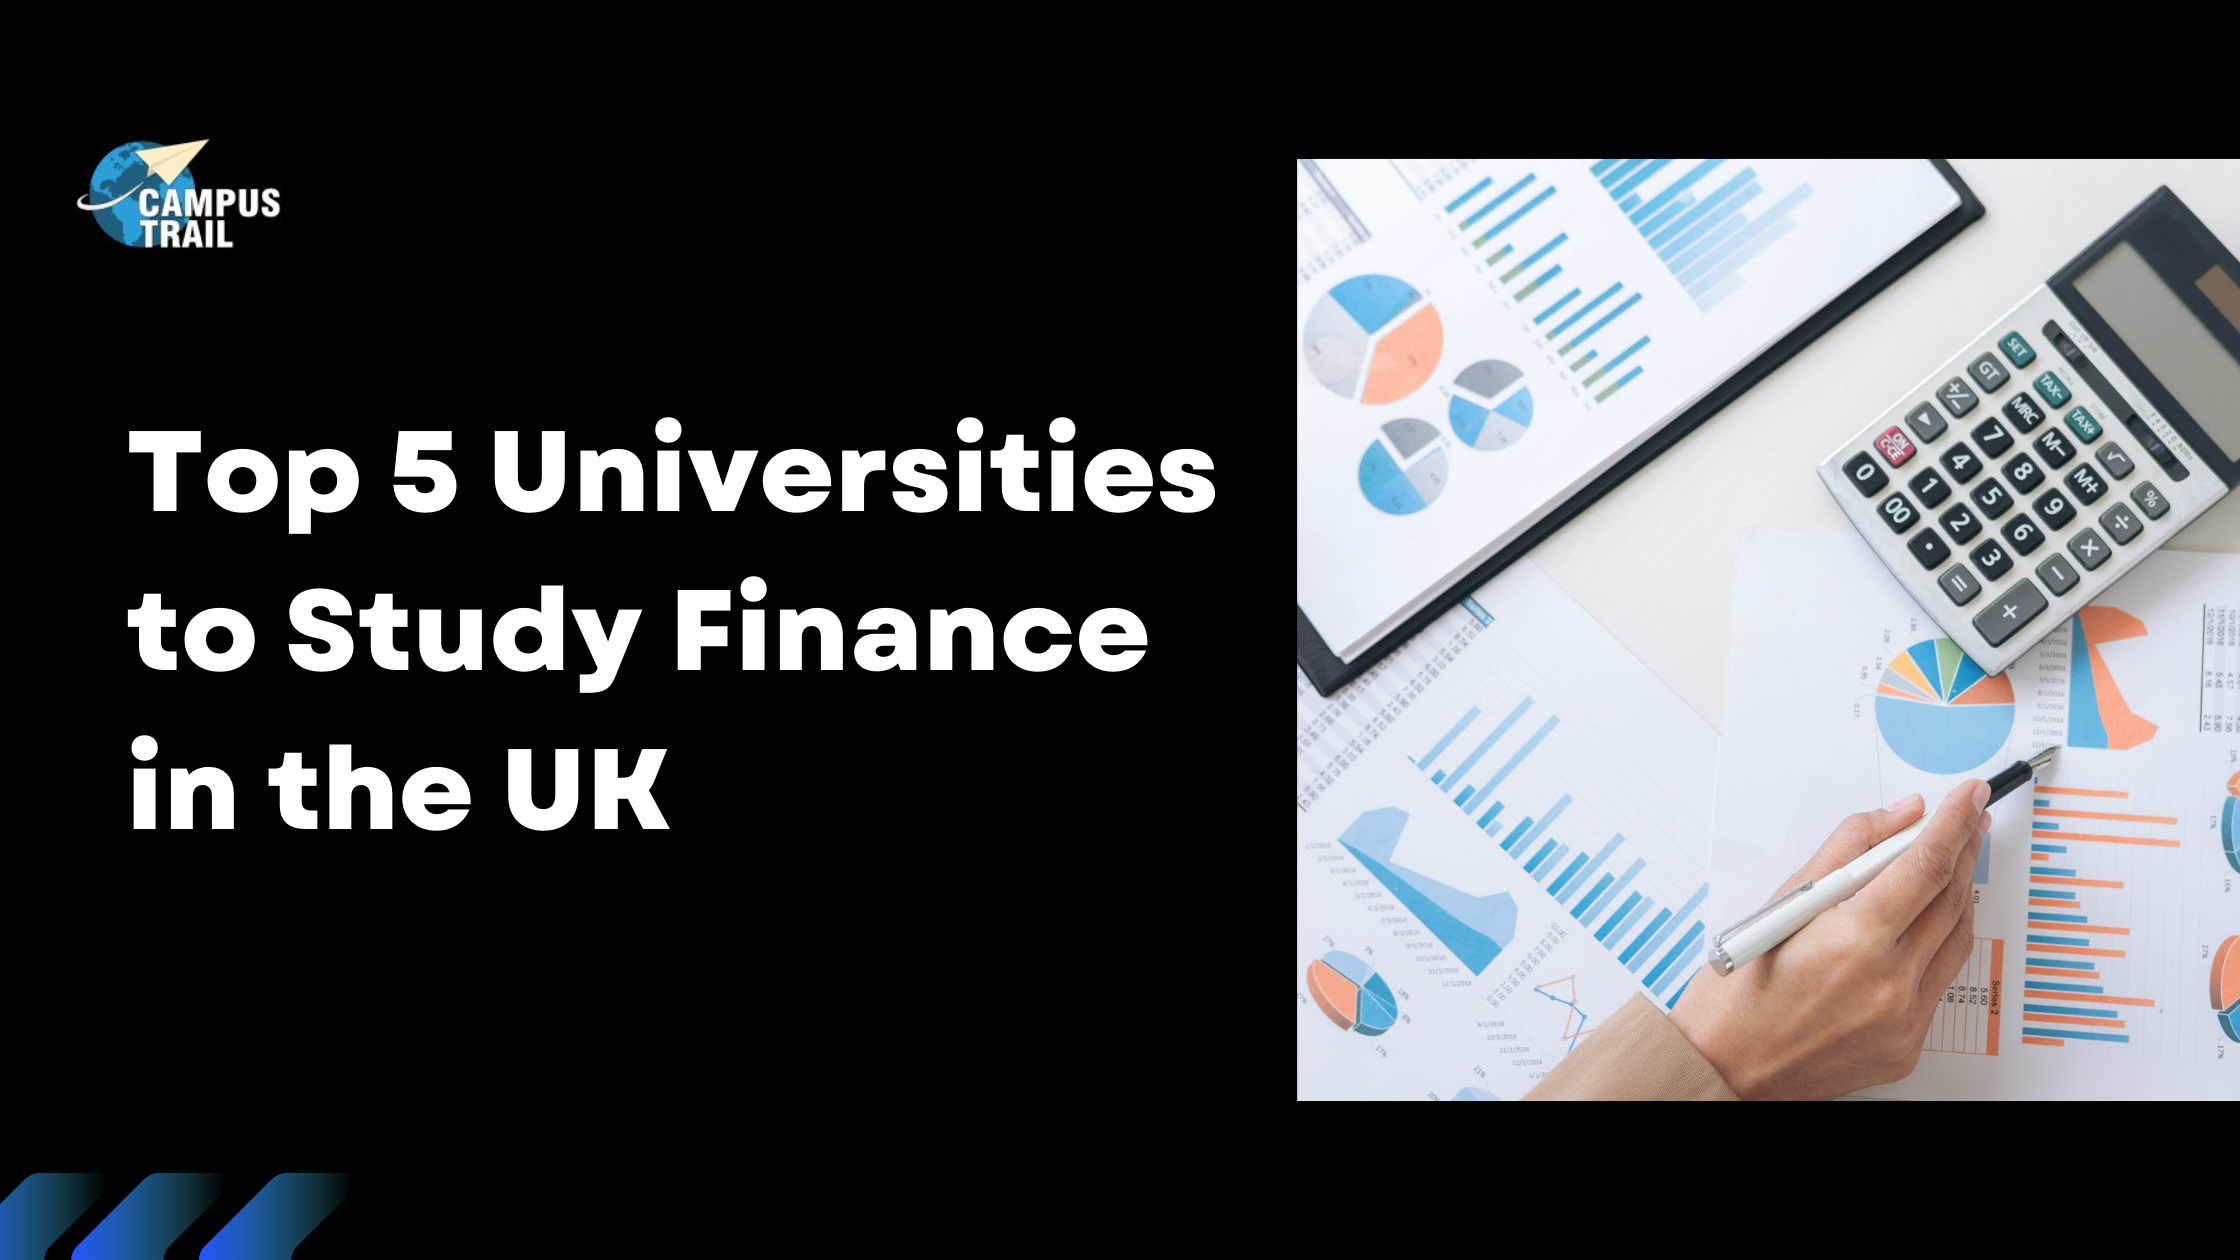 Top 5 Universities to Study Finance in the UK